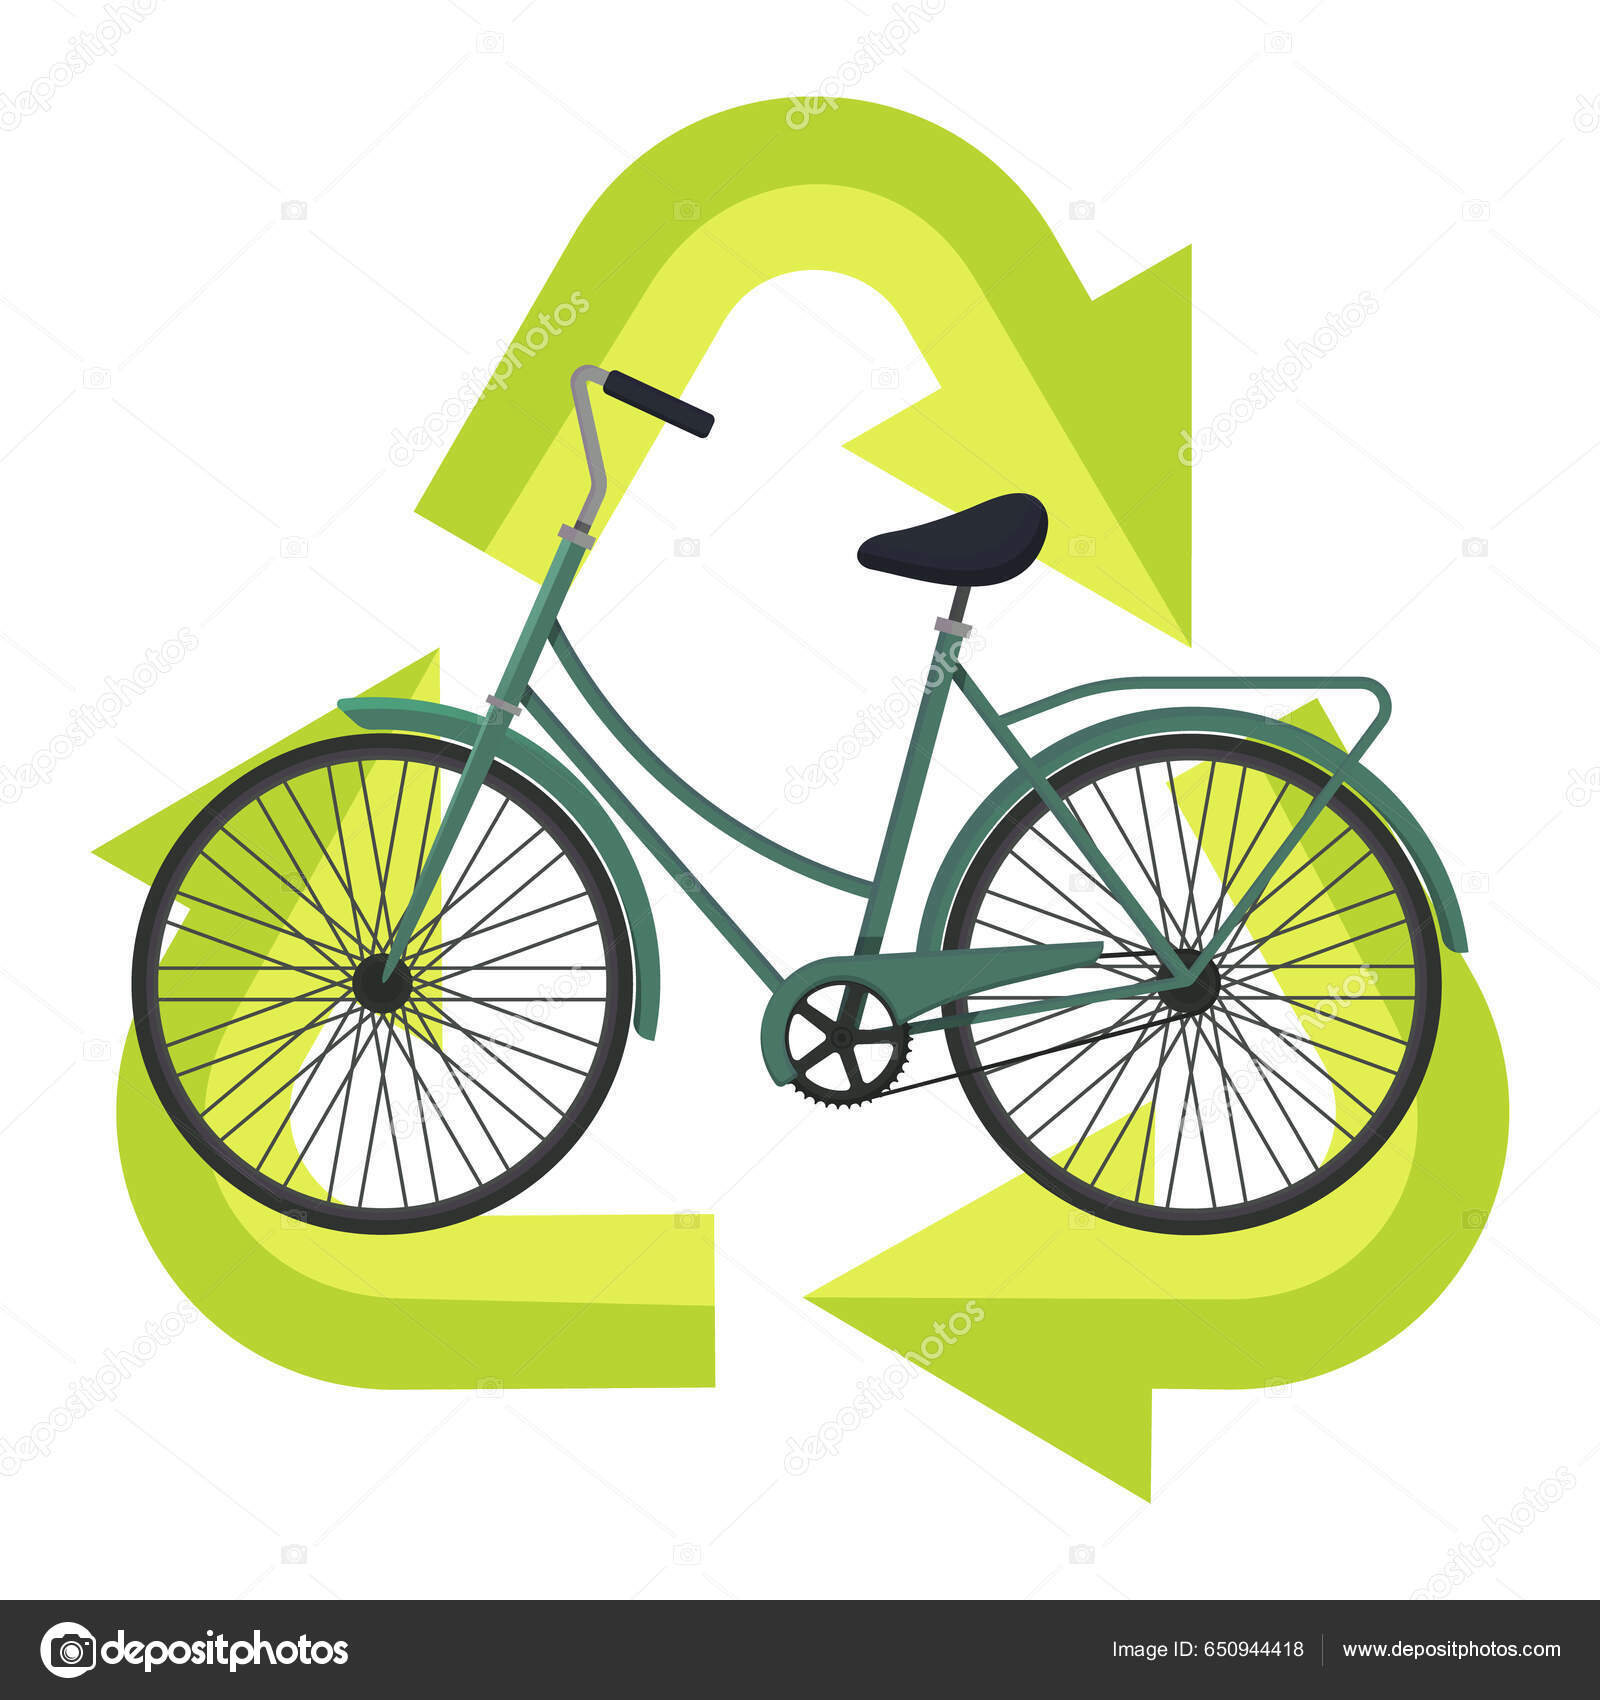 Sticker protection design – motifs e-bike/VTTAE - Energy Cycle